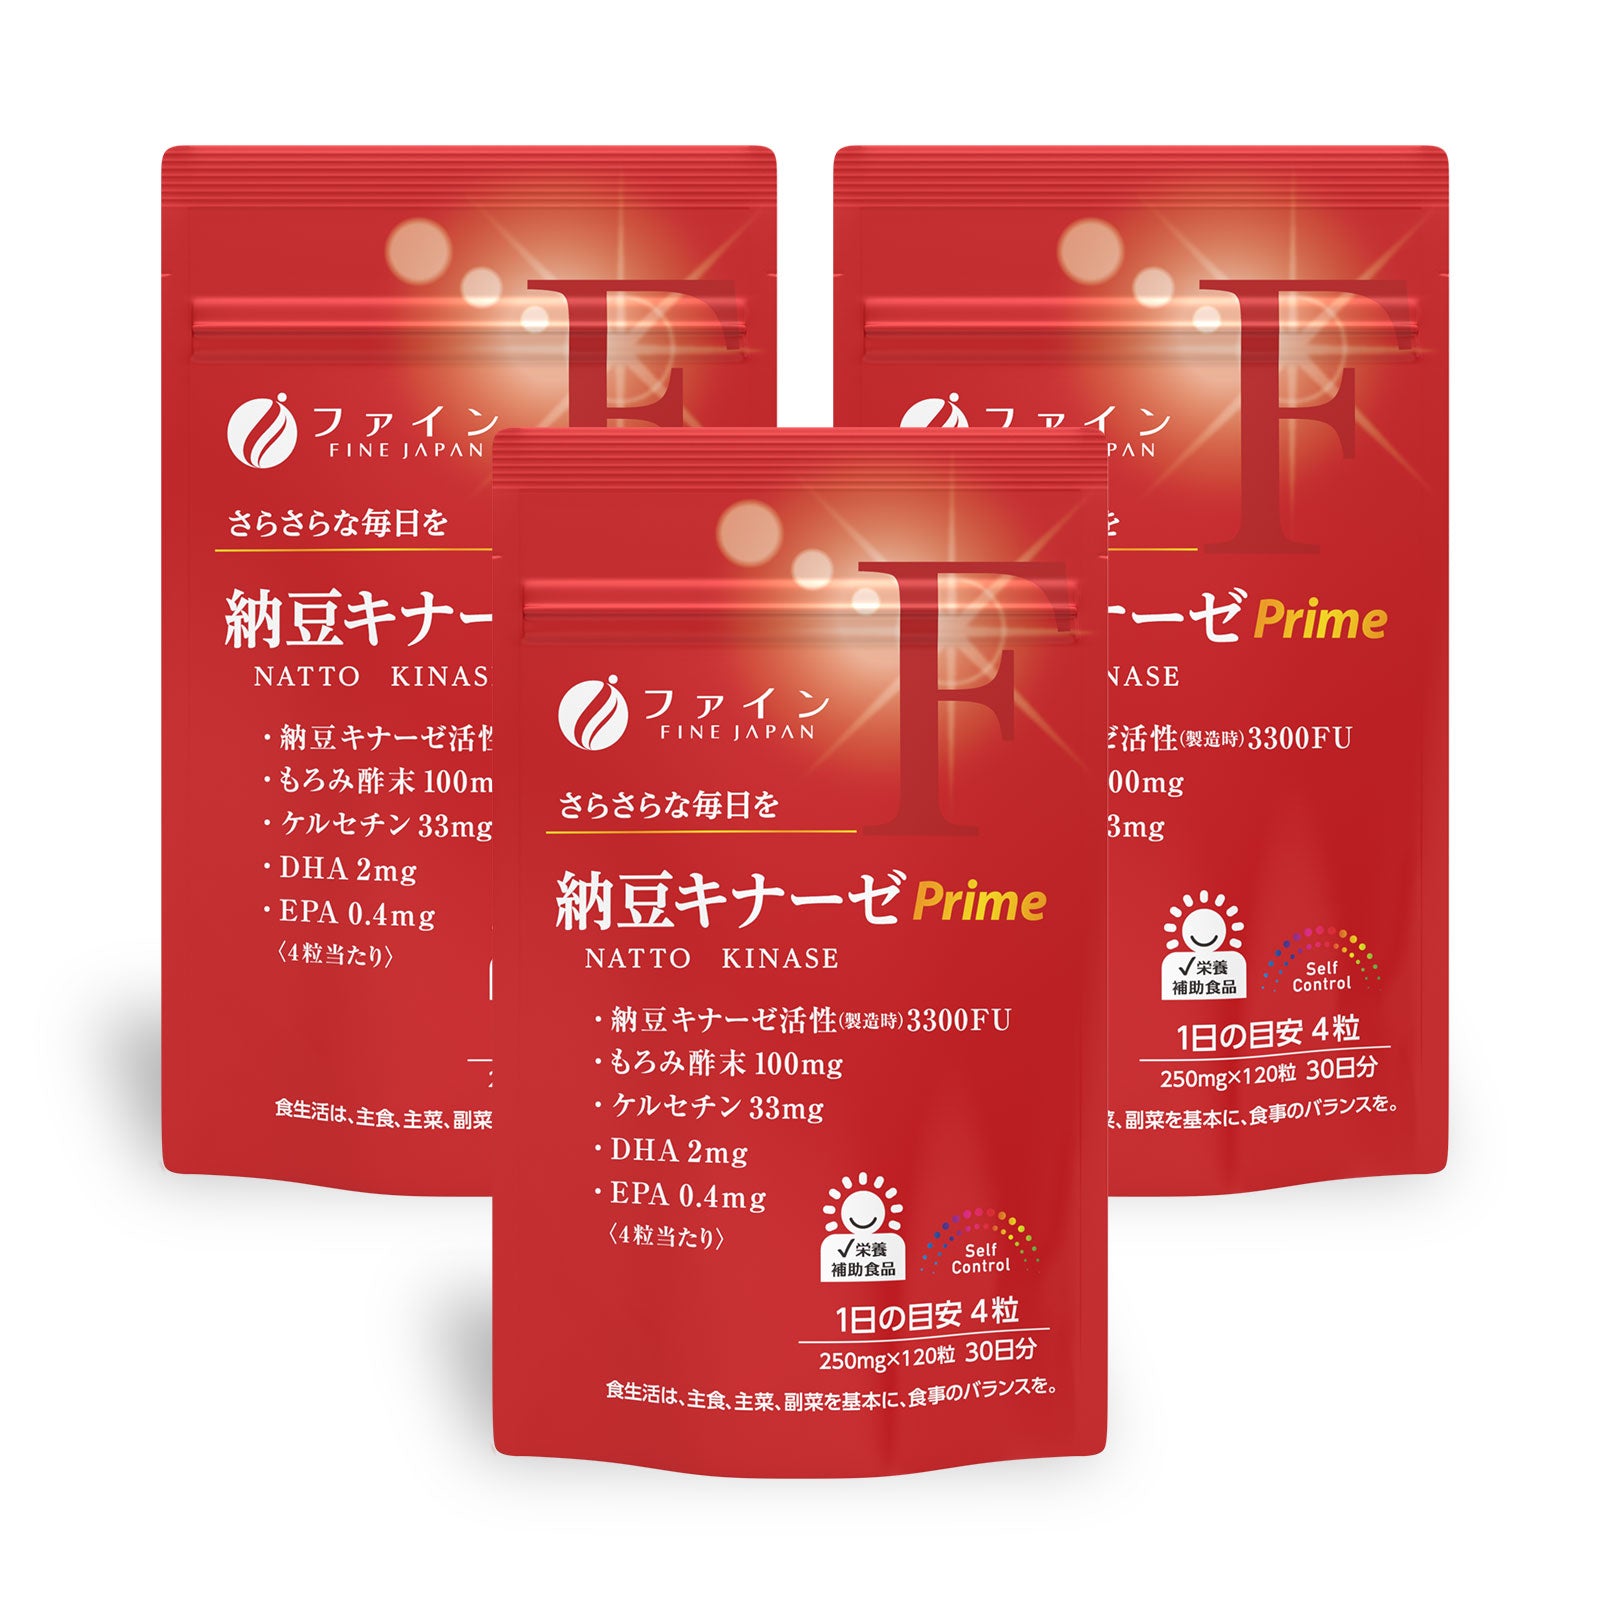 Nattokinase Prime 3300FU - Moromi Vinegar Powder, Quercetin, DHA and EPA, Non-GMO 30g (250mg×120 Tablets) Set of 3 by FINE JAPAN